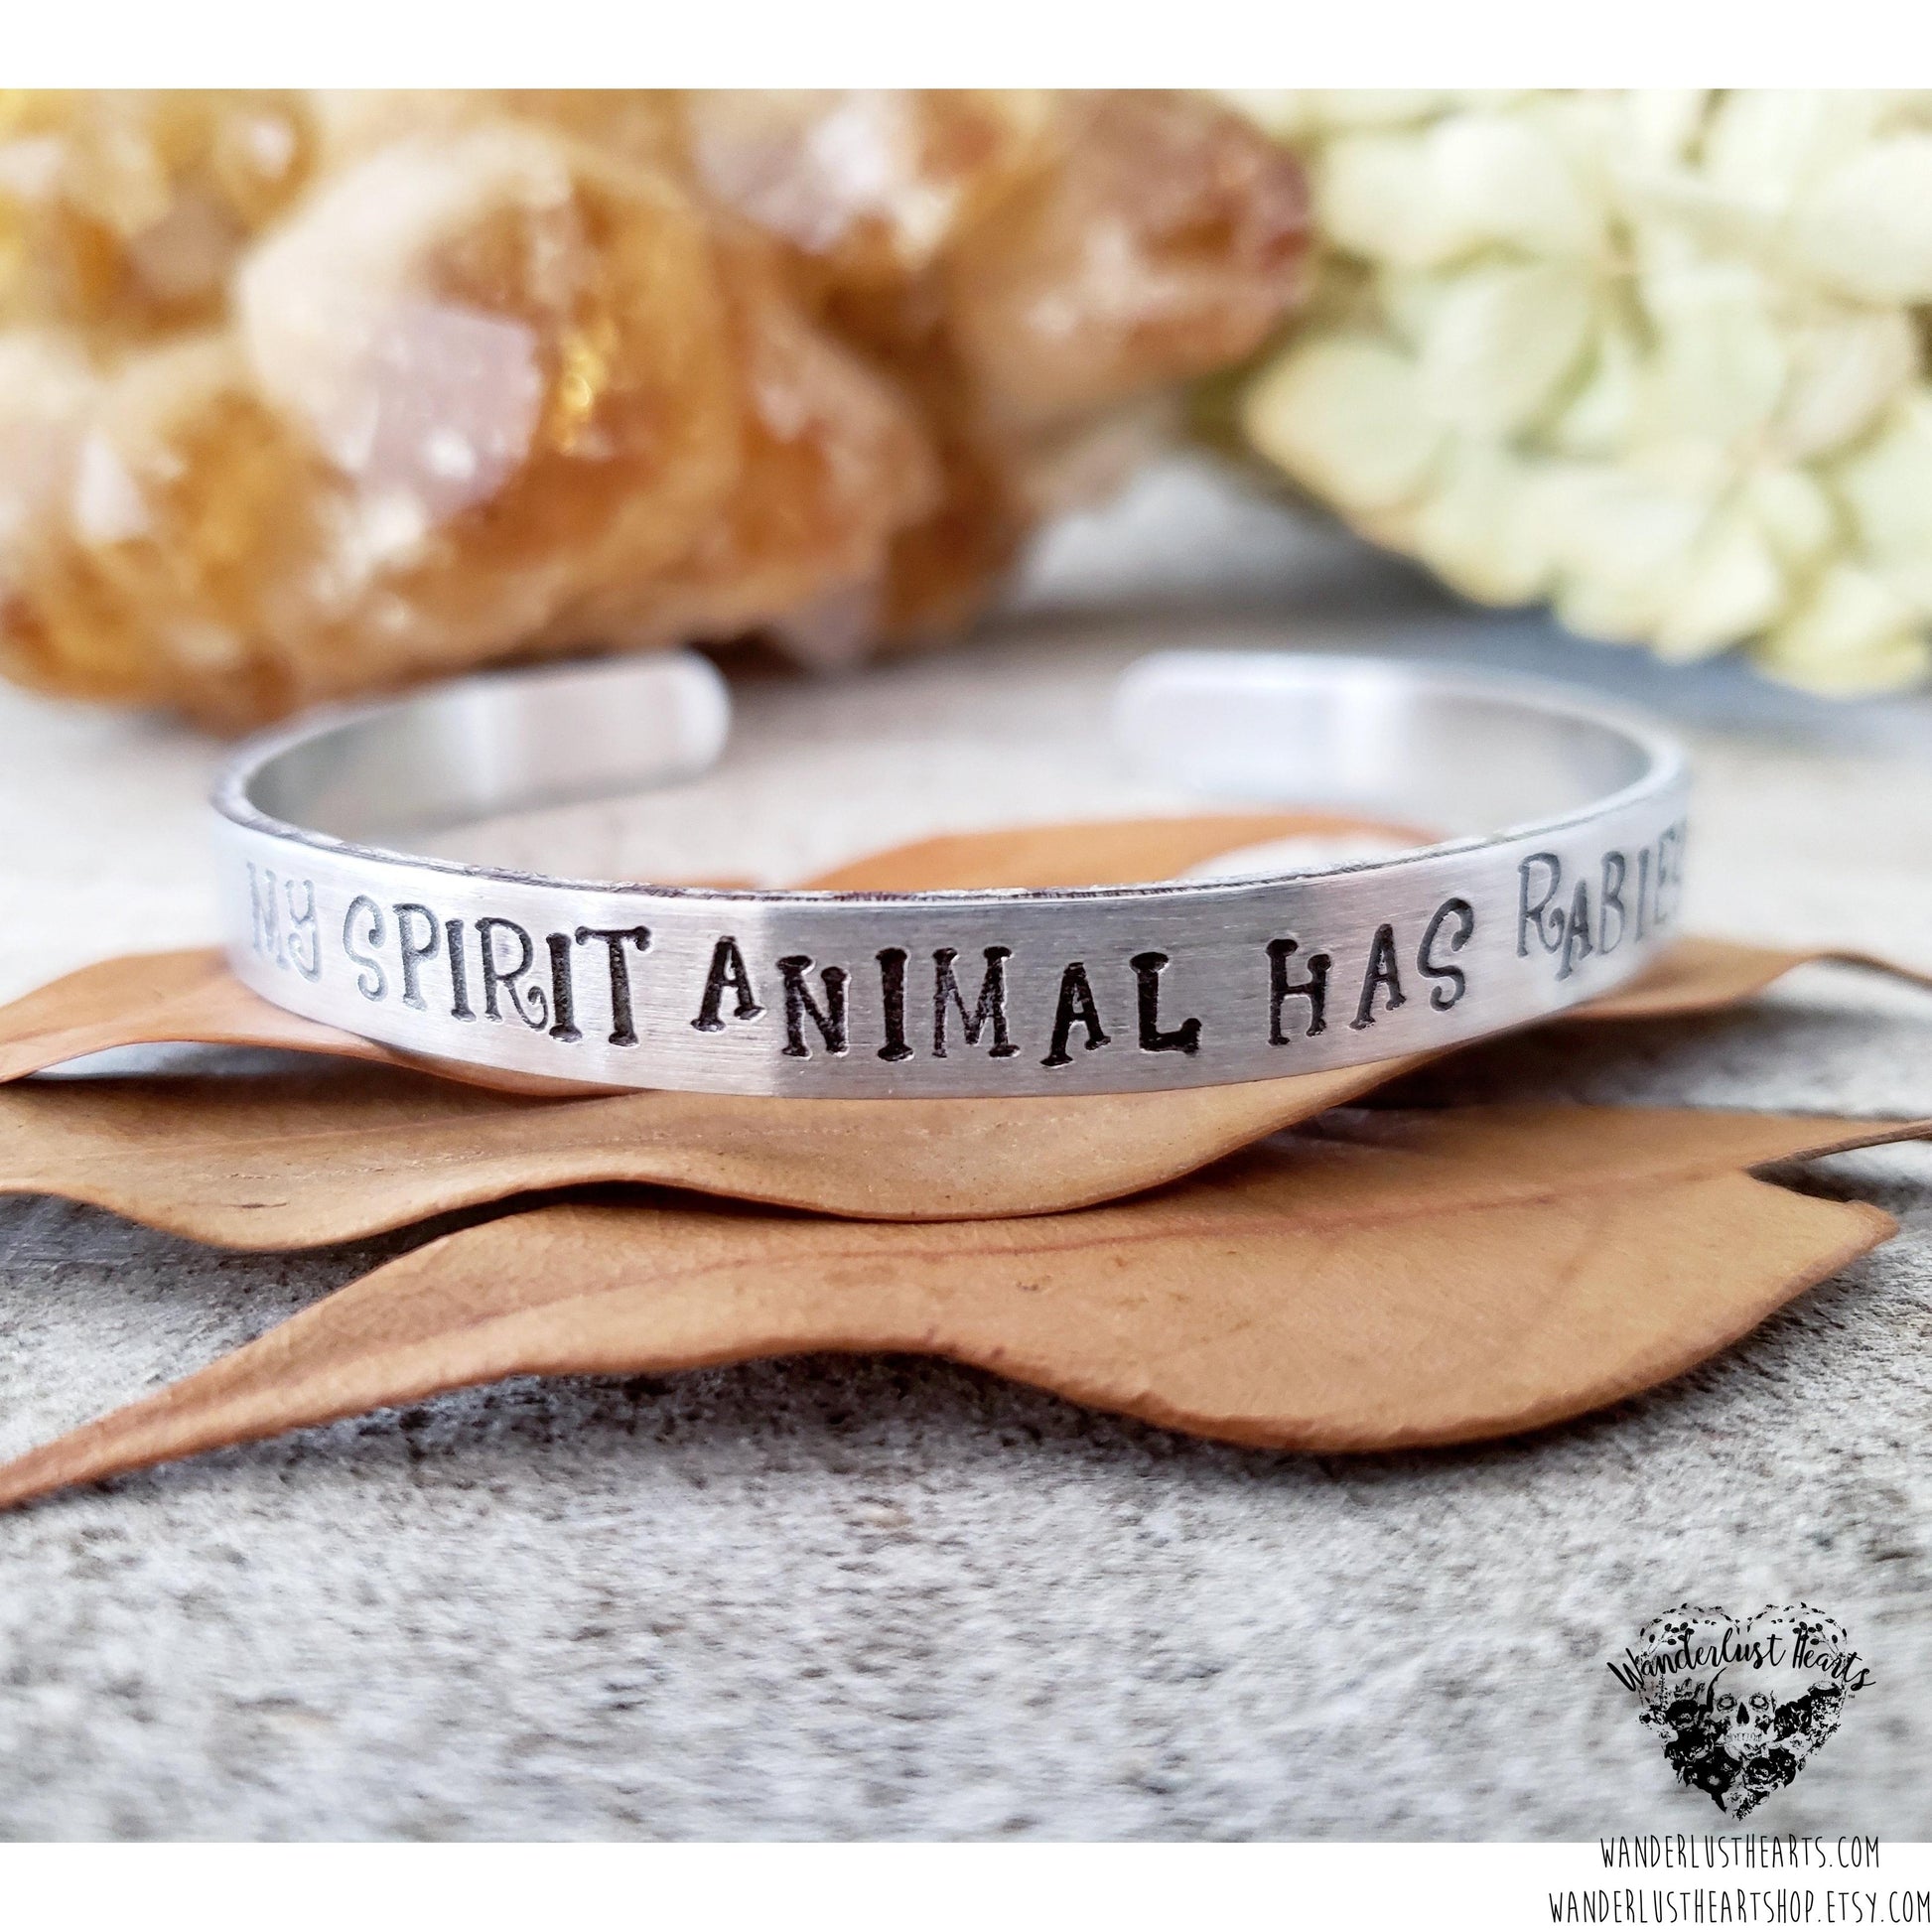 My spirit animal has rabies cuff bracelet-Wanderlust Hearts